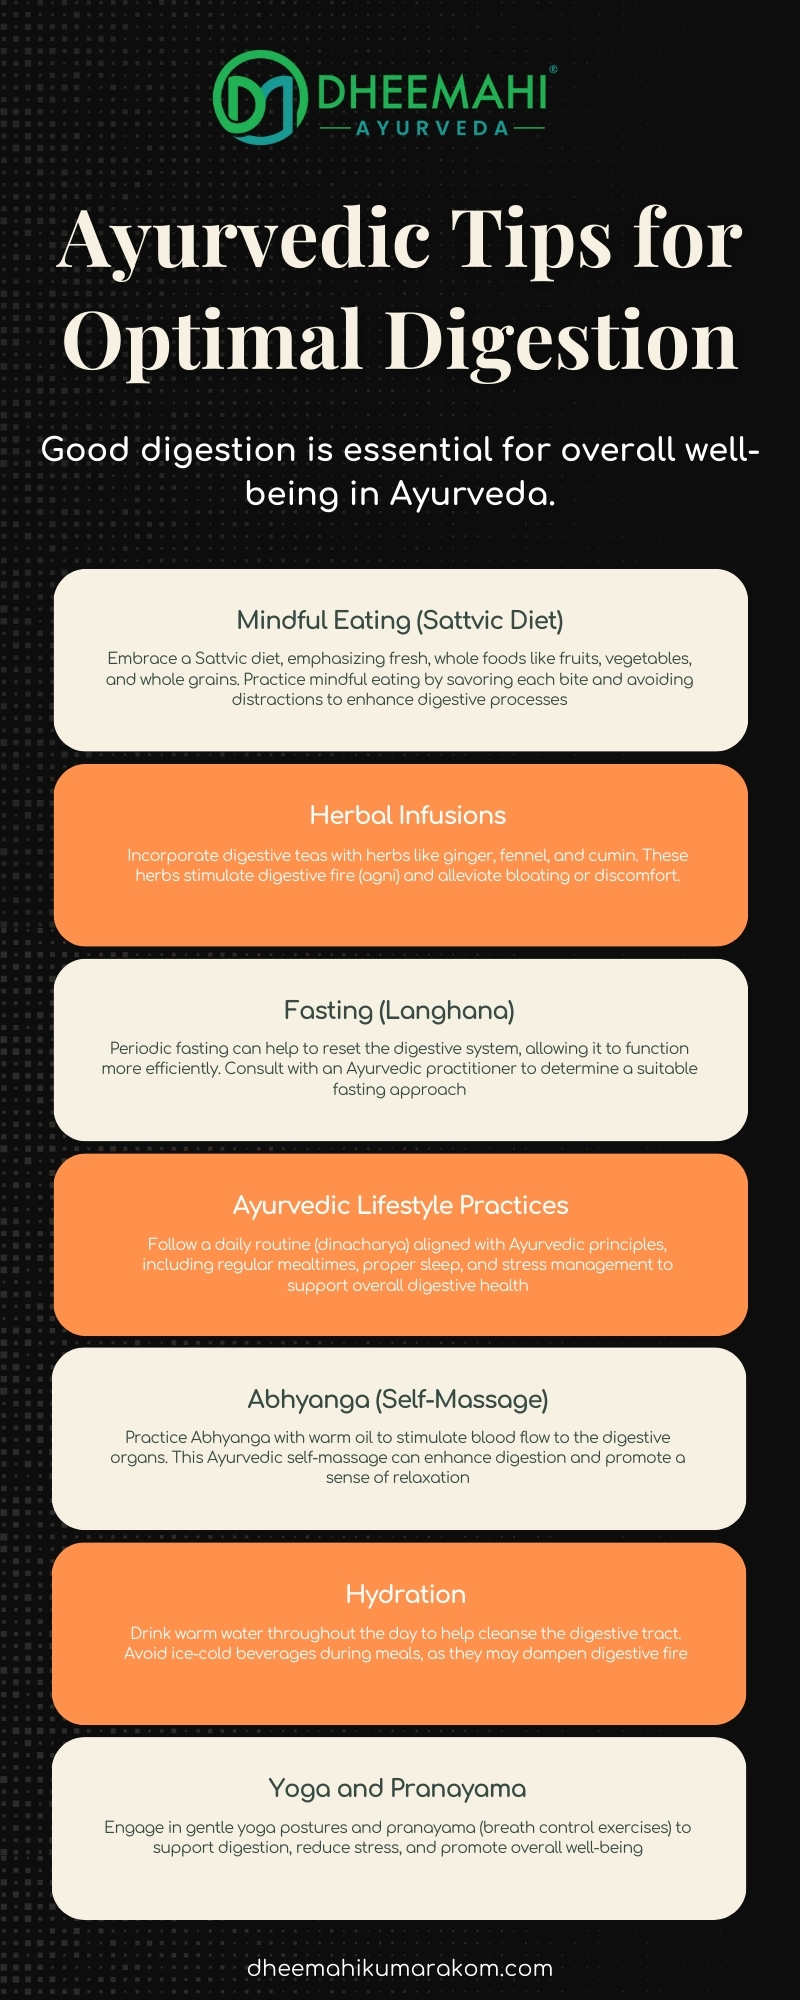 Ayurvedic Tips for Optimal Digestion